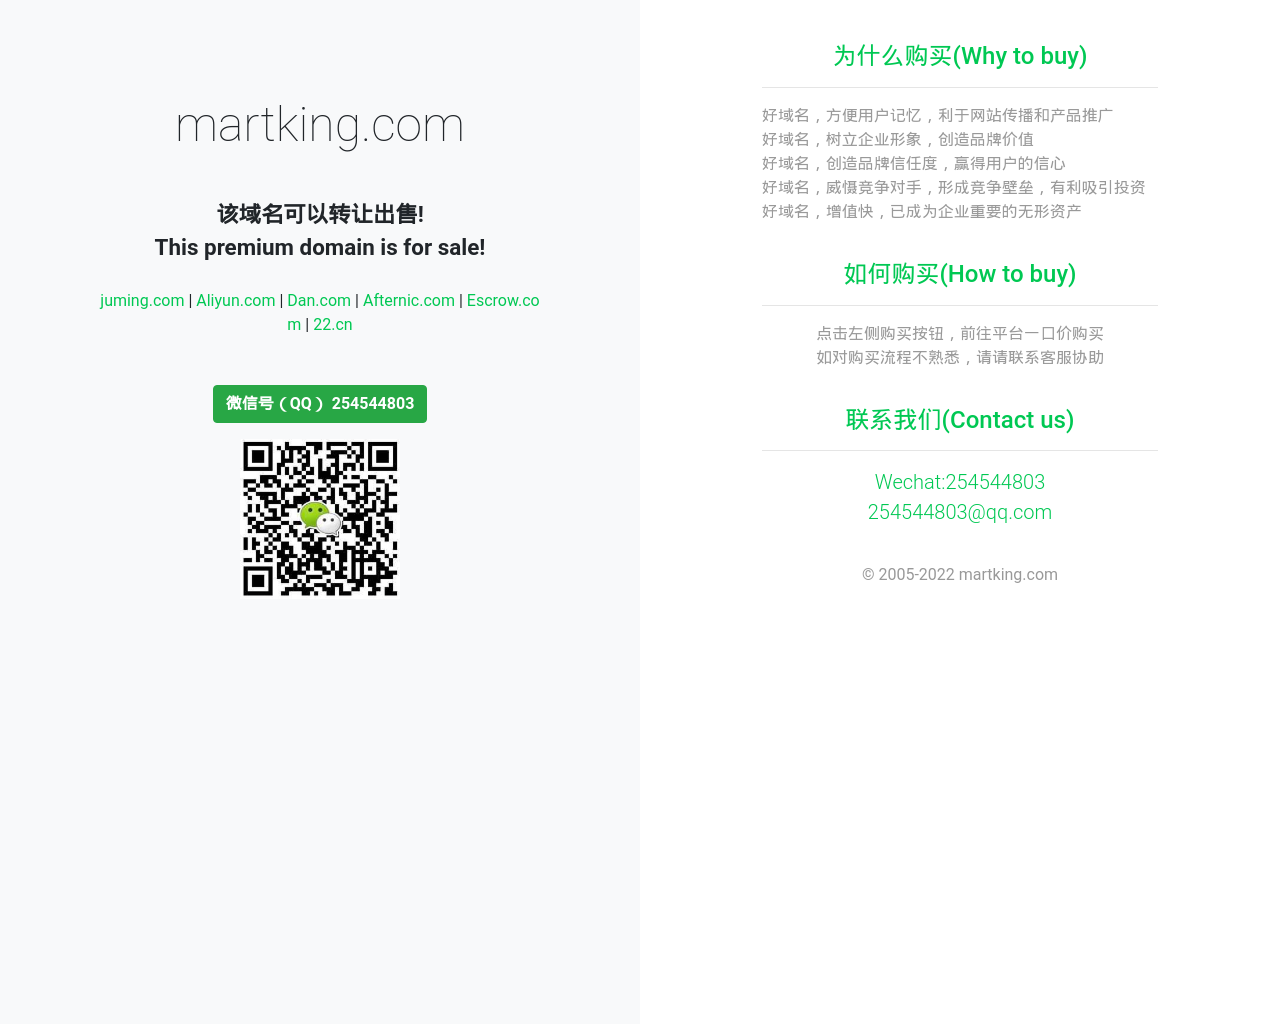 martking.com